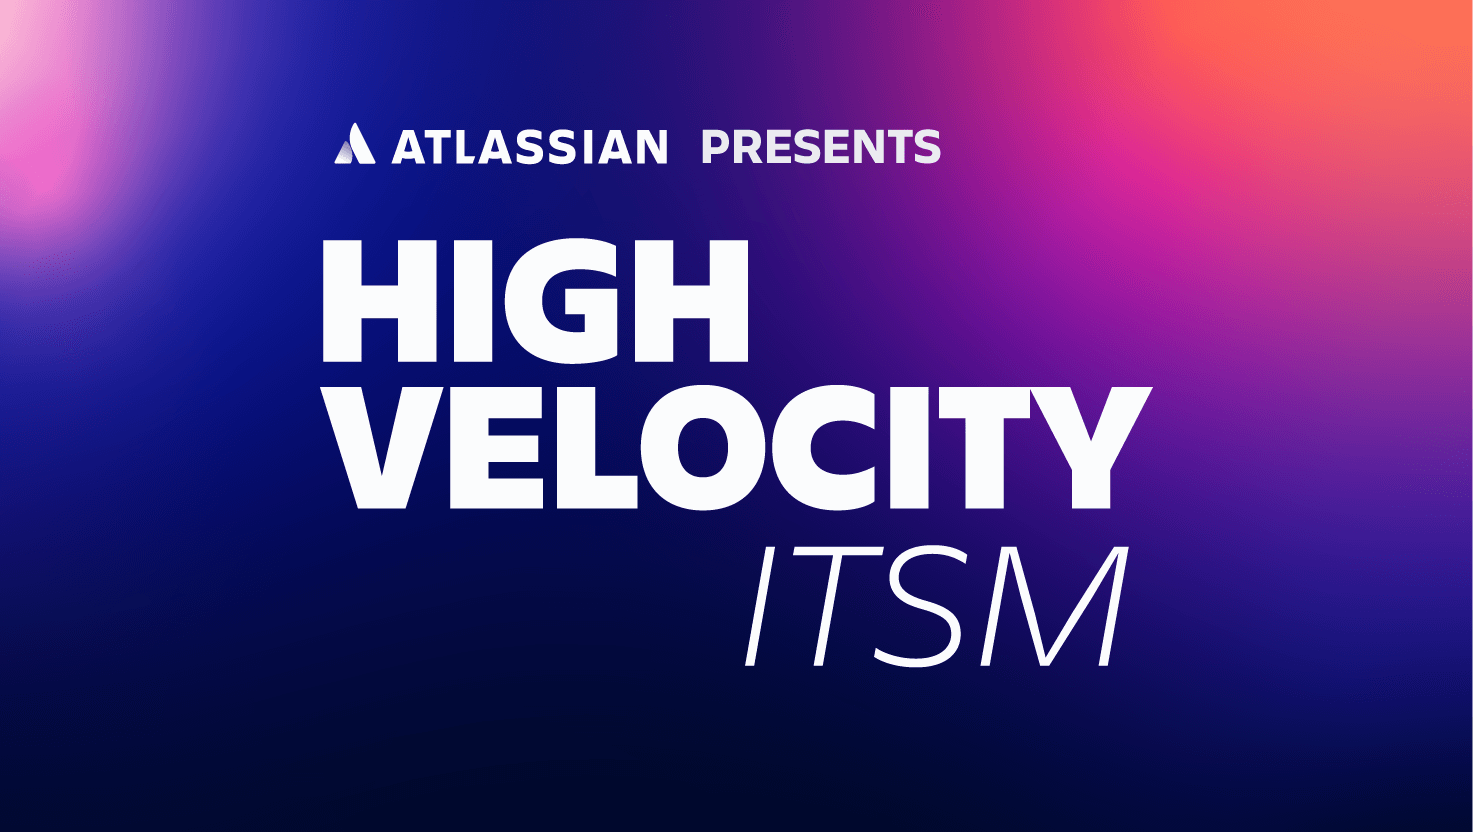 High veloclity ITSM event